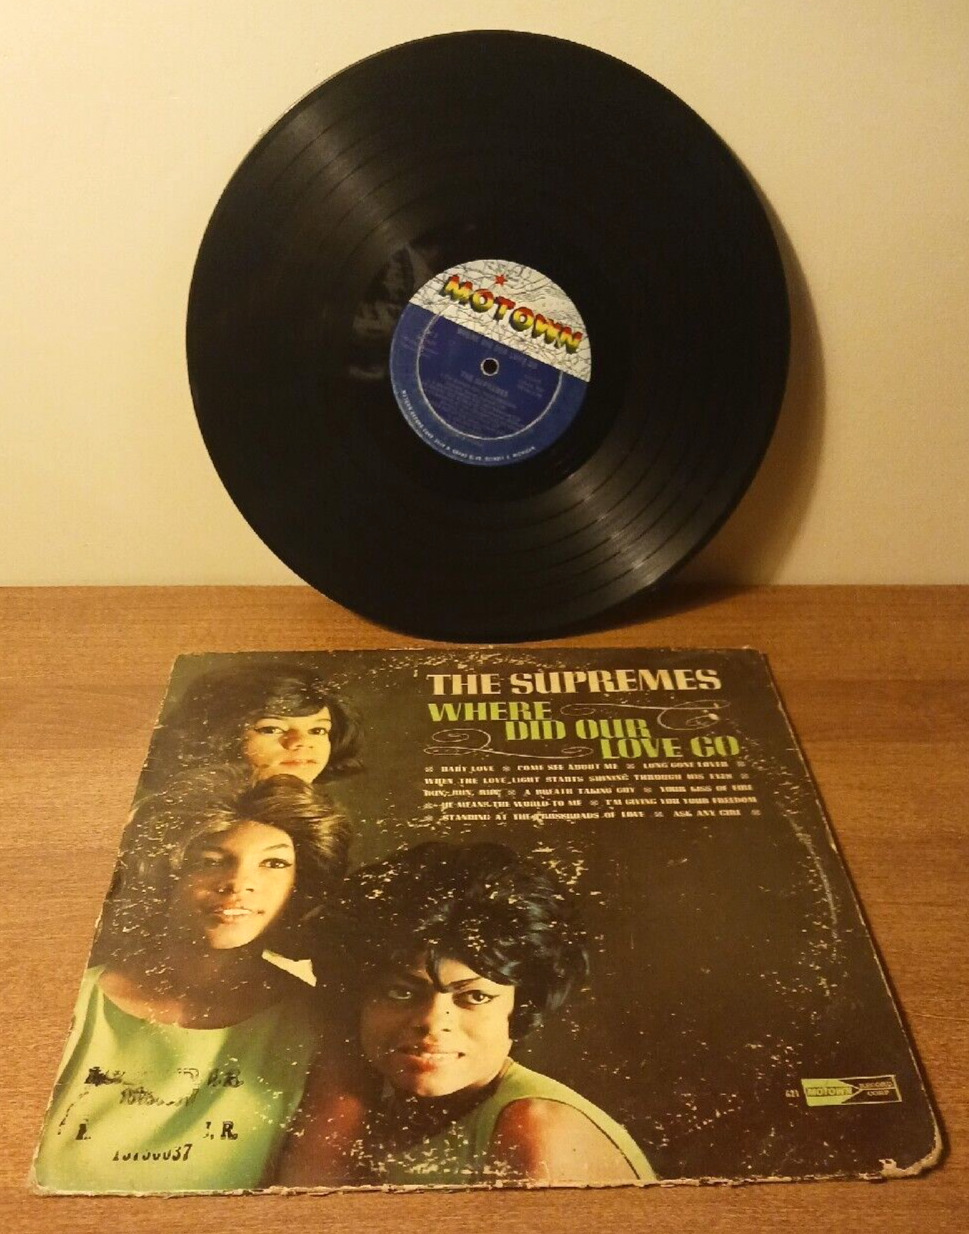 The Supremes “Where Did Our Love Go” MOTOWN 621 - 1964 Rare MONO Version Vintage